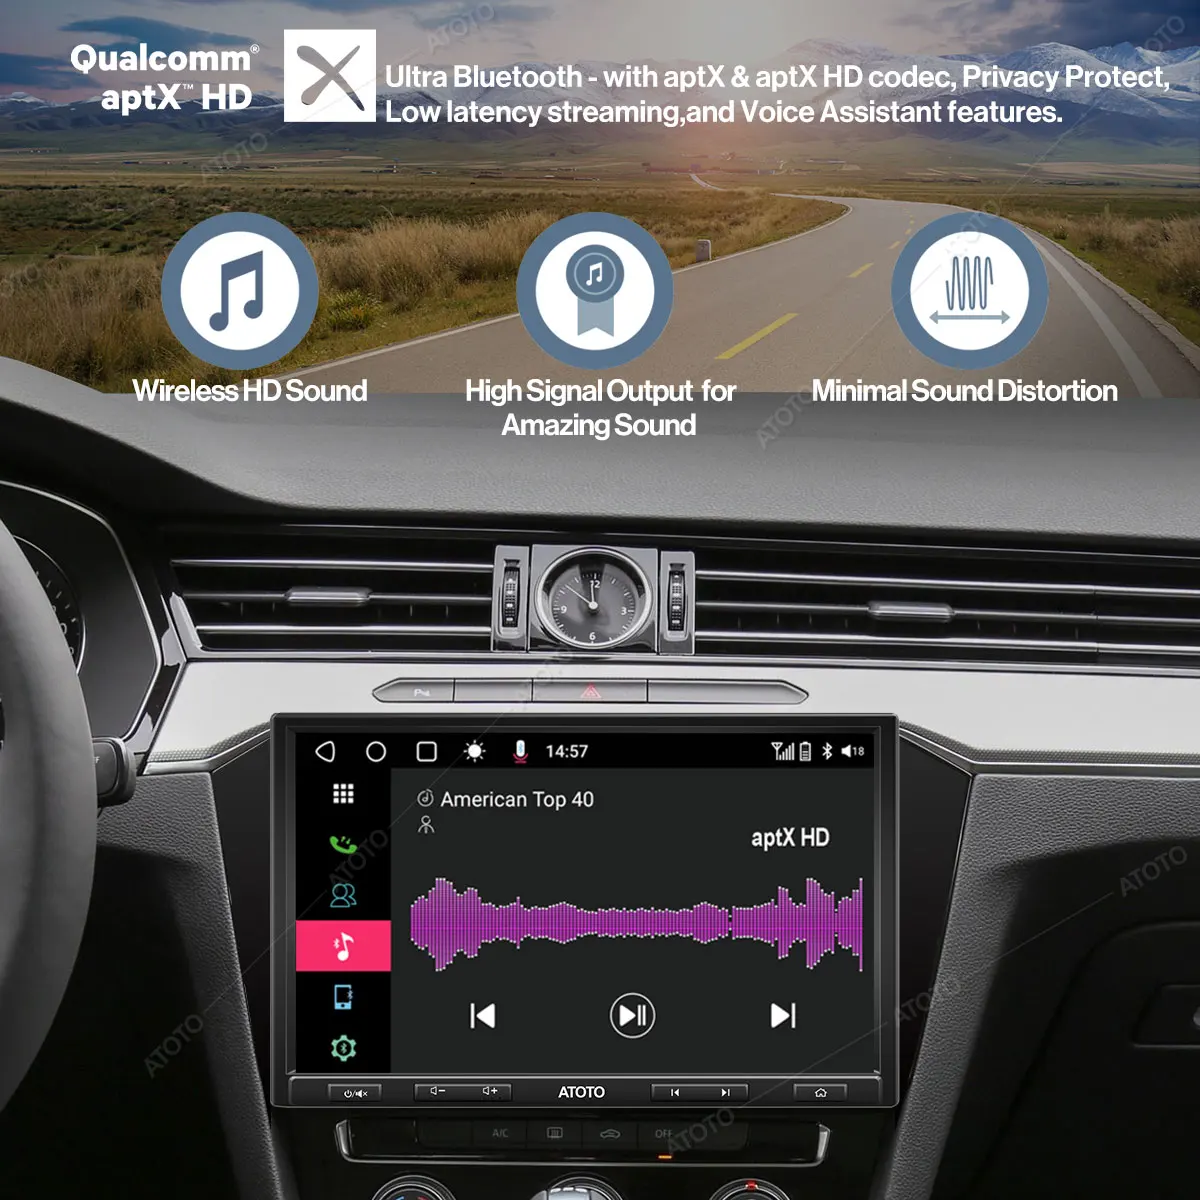 Wholesale ATOTO S8 Pro Android Radio Car Fm/am navi Multimedia